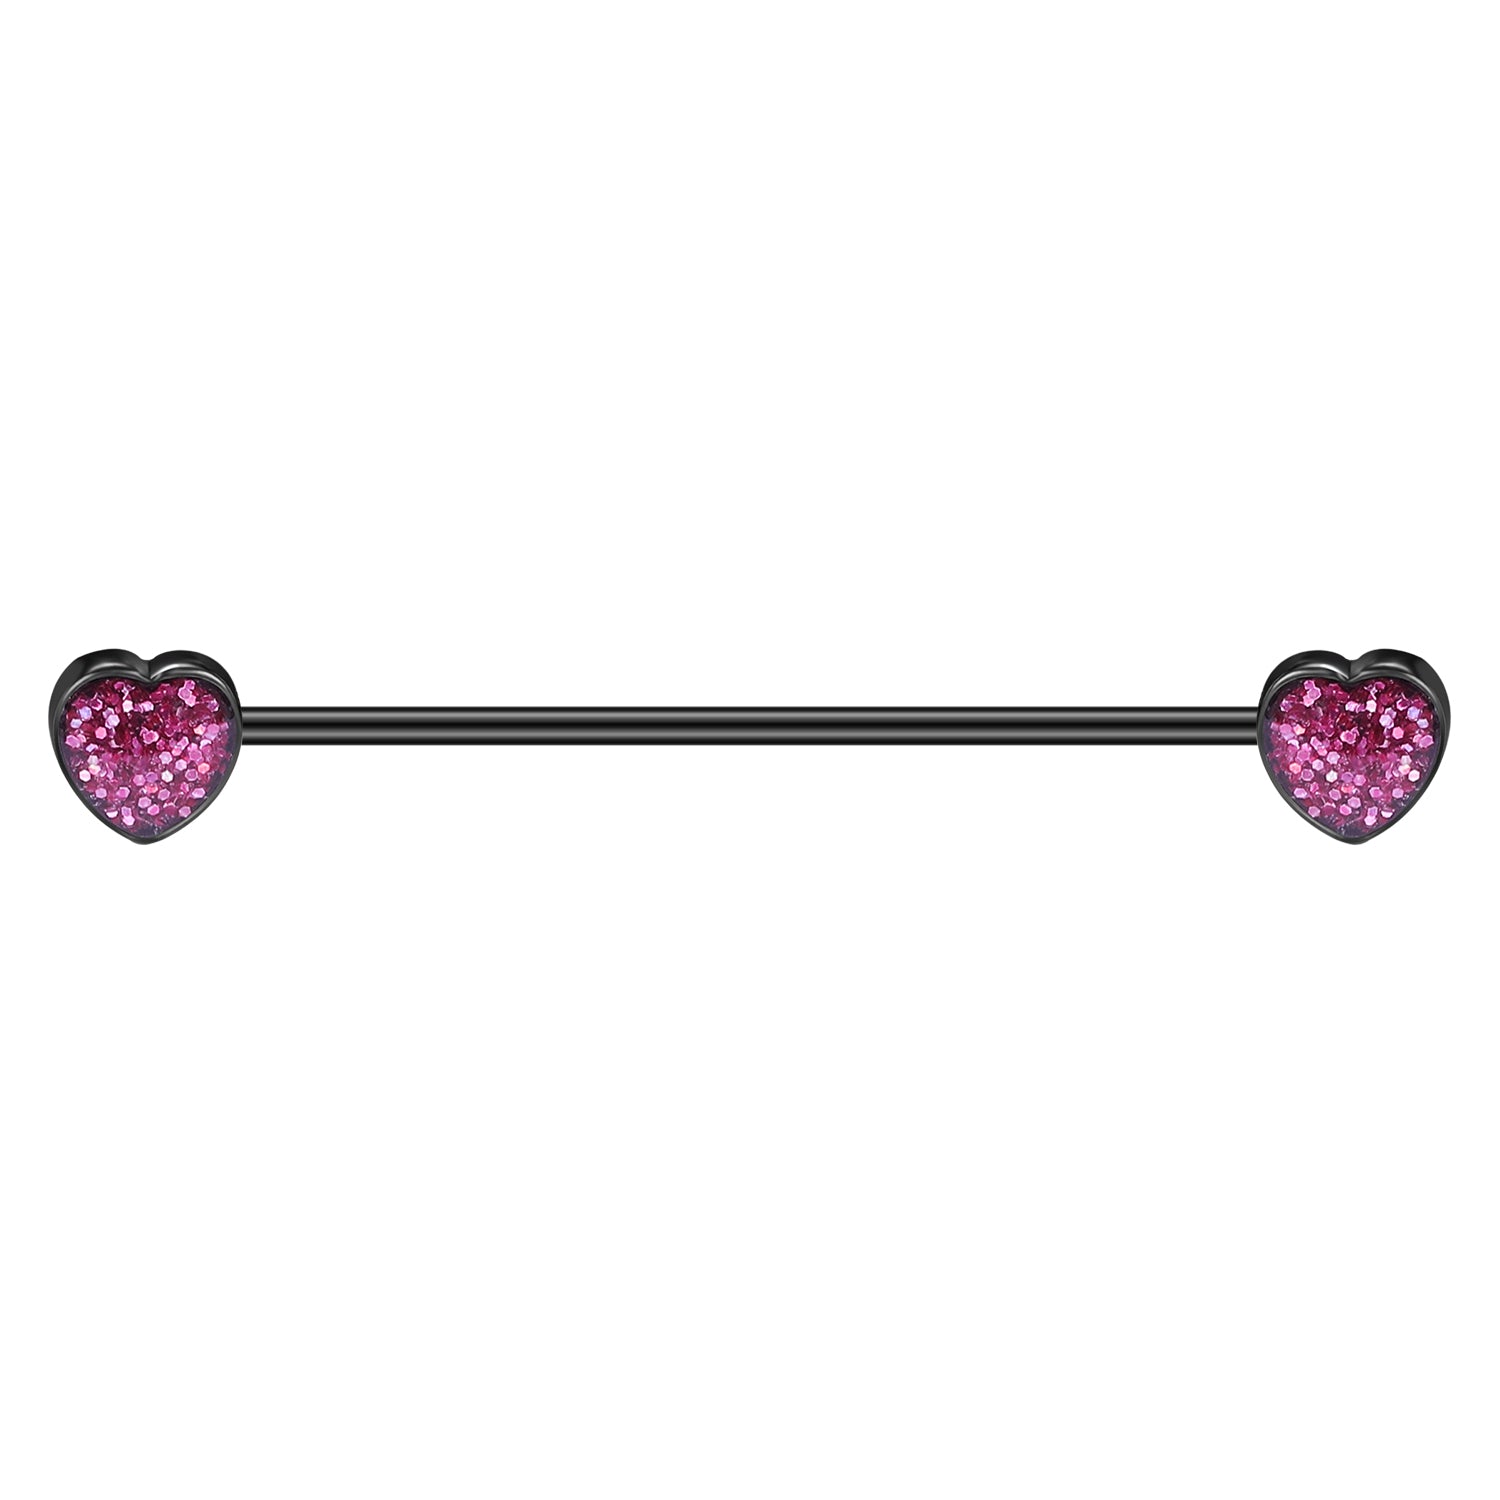 14g-heart-industrial-barbell-black-silver-color-helix-ear-piercing